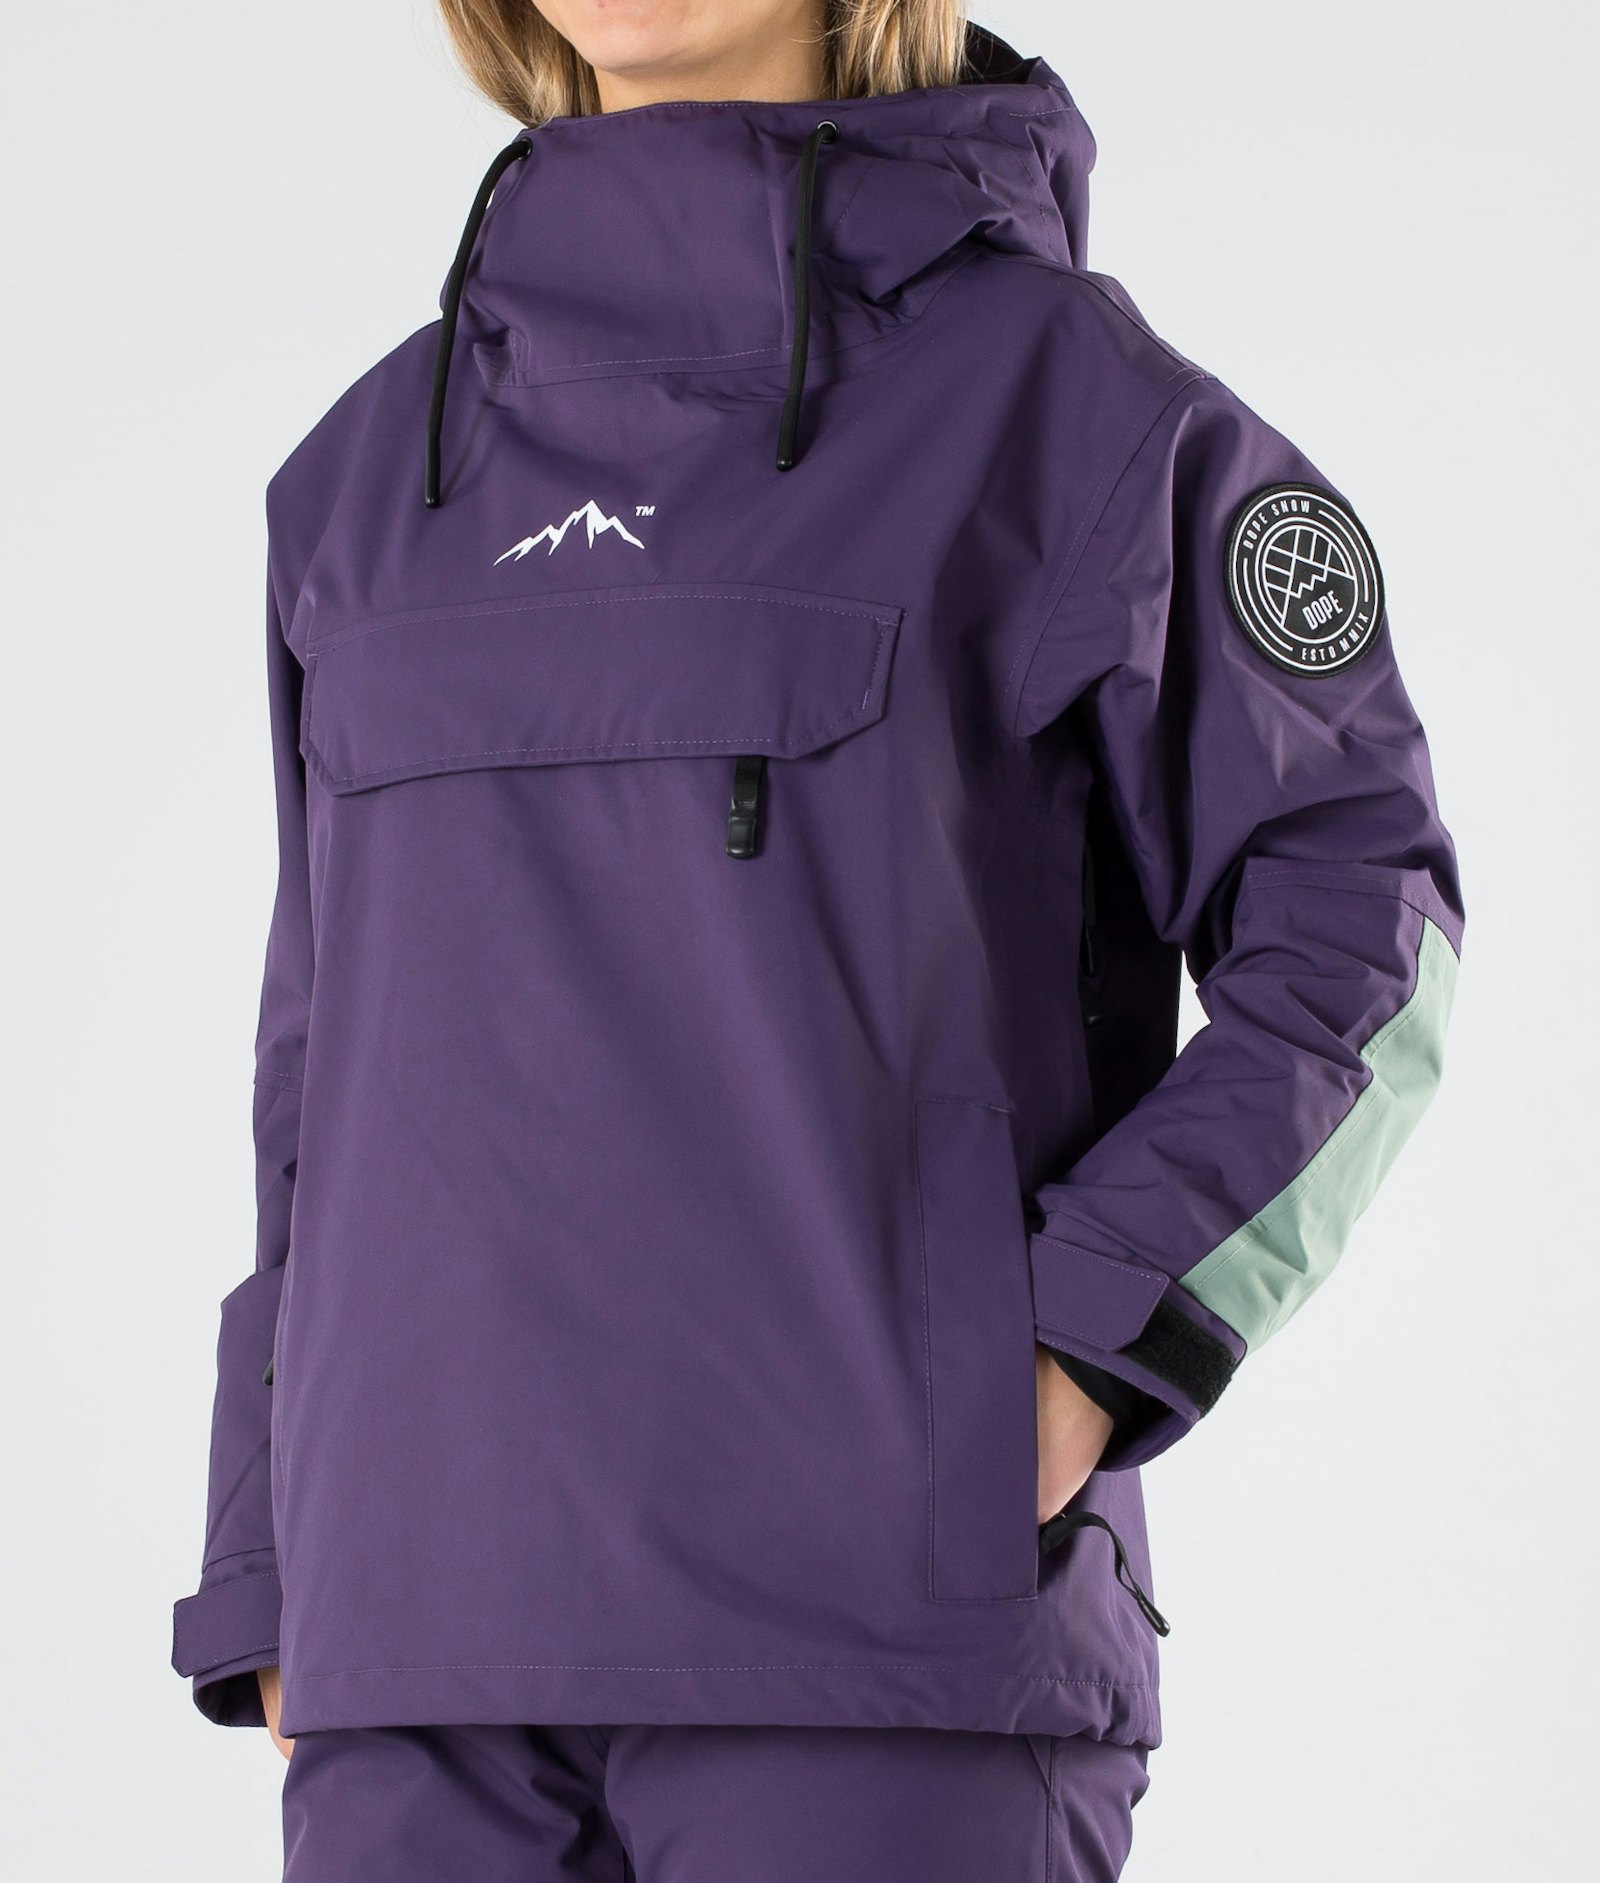 Blizzard W 2019 Snowboard Jacket Women Limited Edition Grape Faded Green